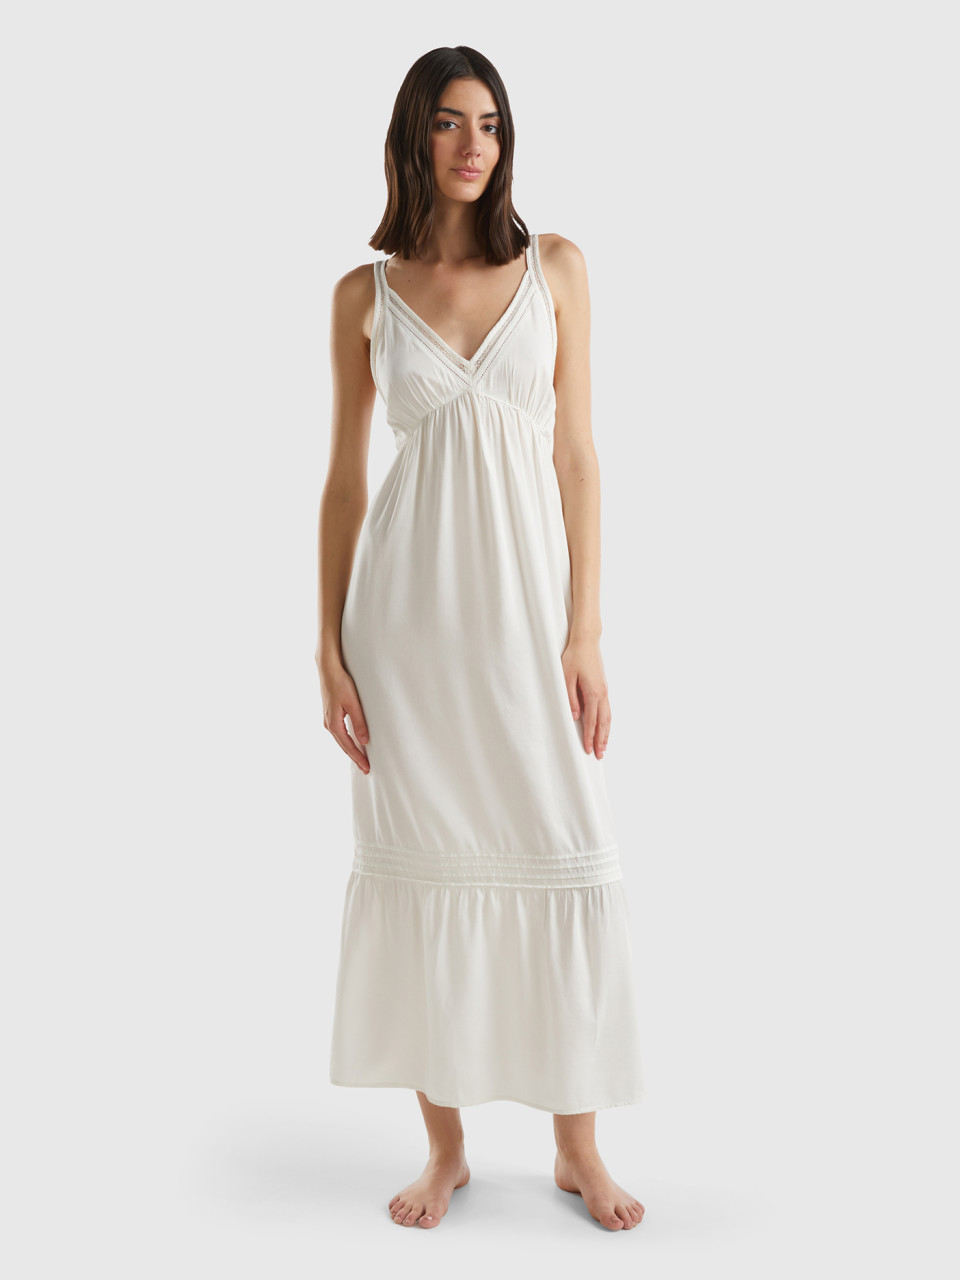 Benetton, Modal® And Cotton Blend Dress, Creamy White, Women